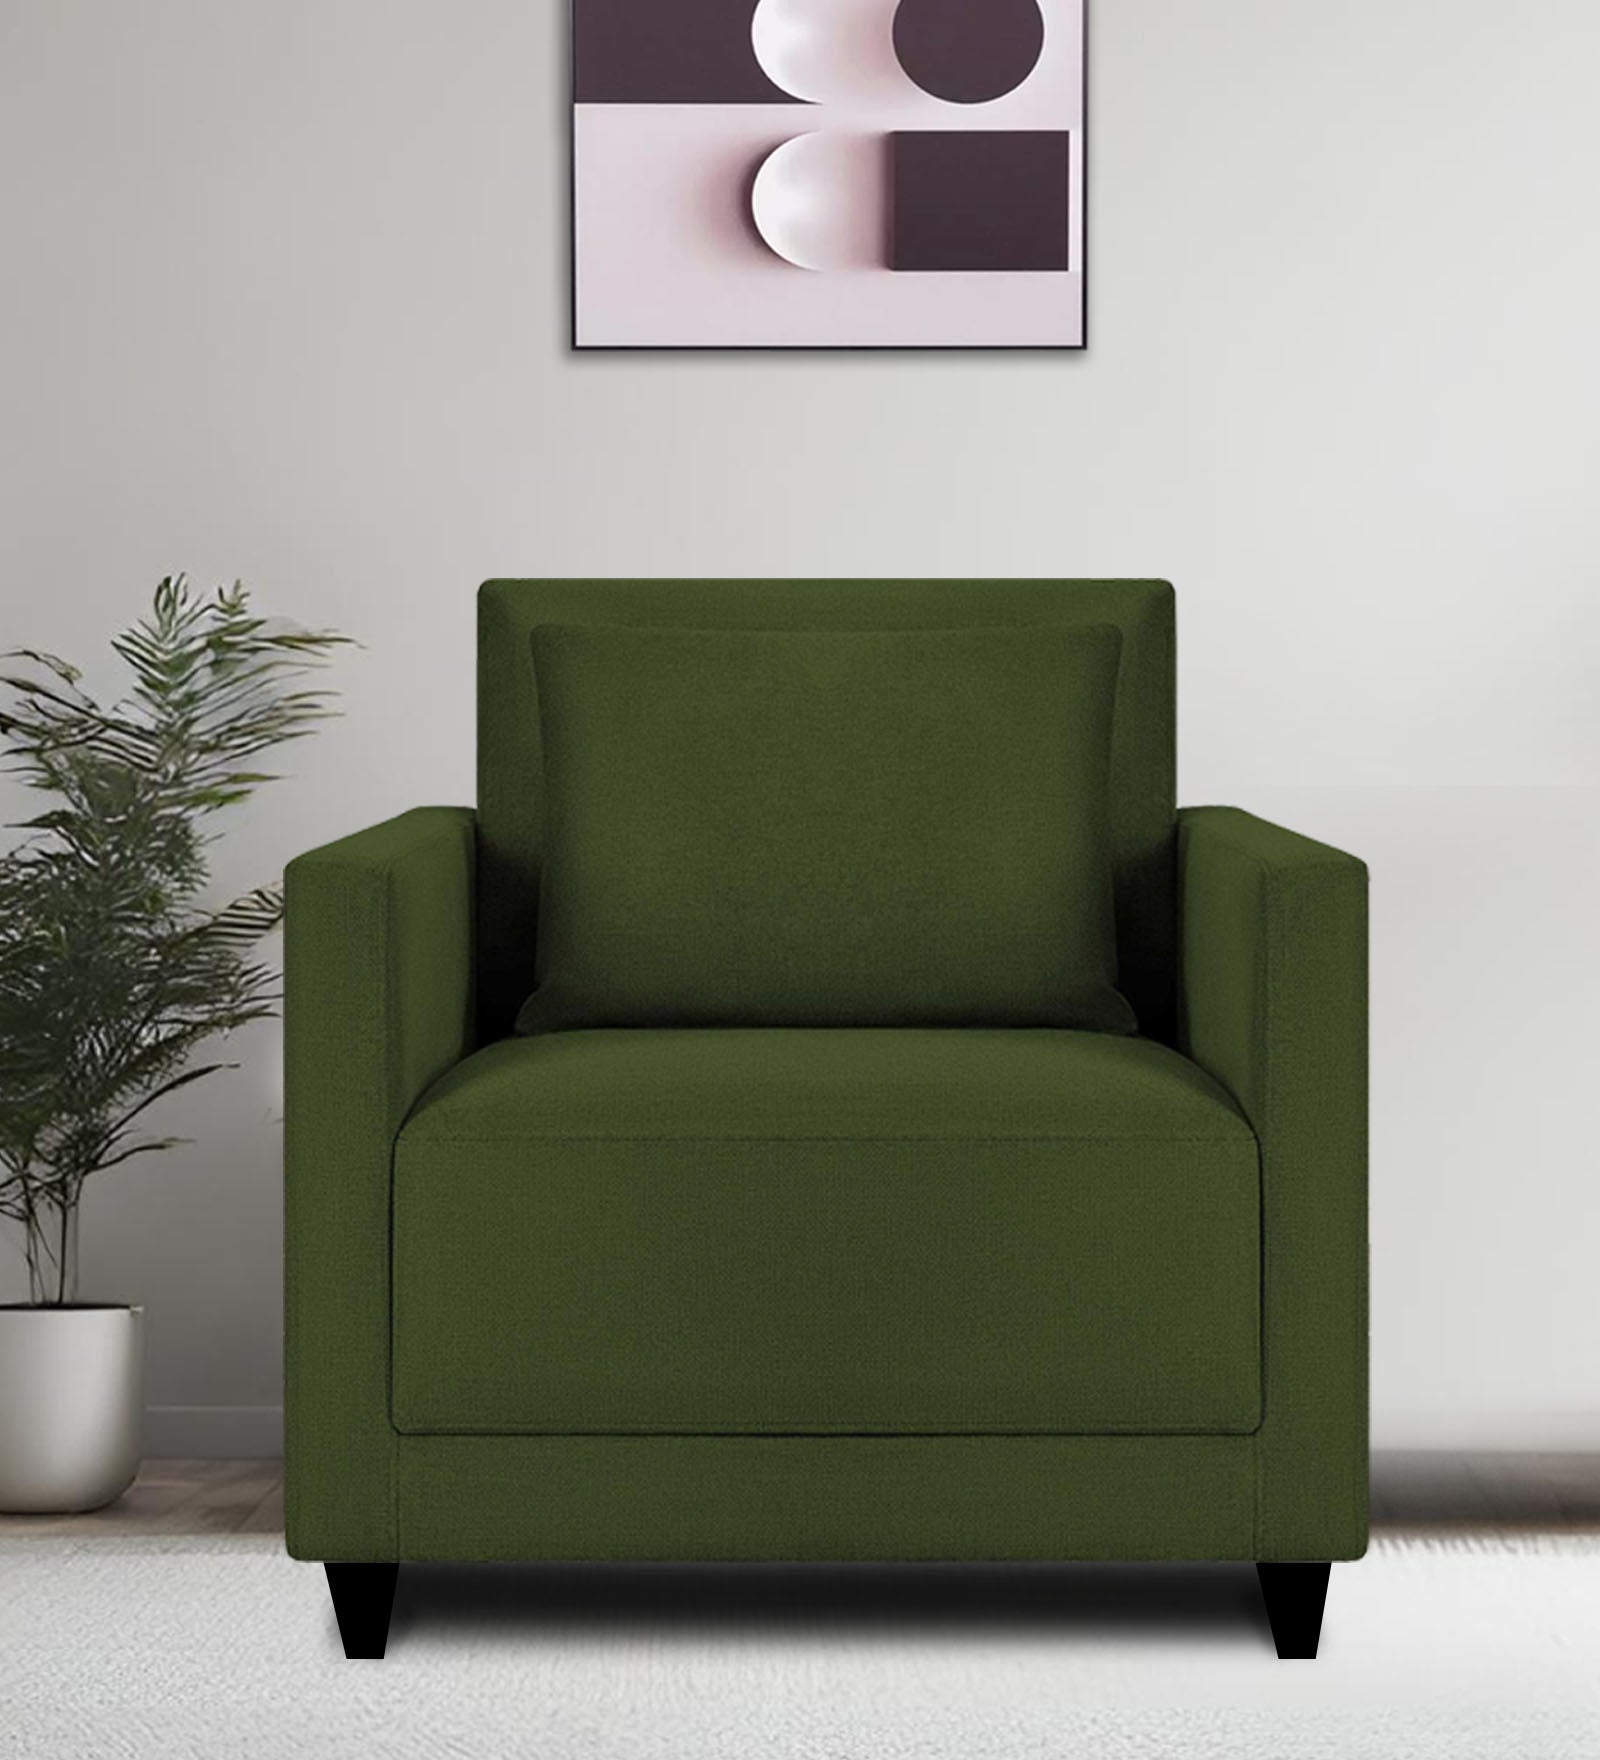 Kera Fabric 1 Seater Sofa in Olive Green Colour